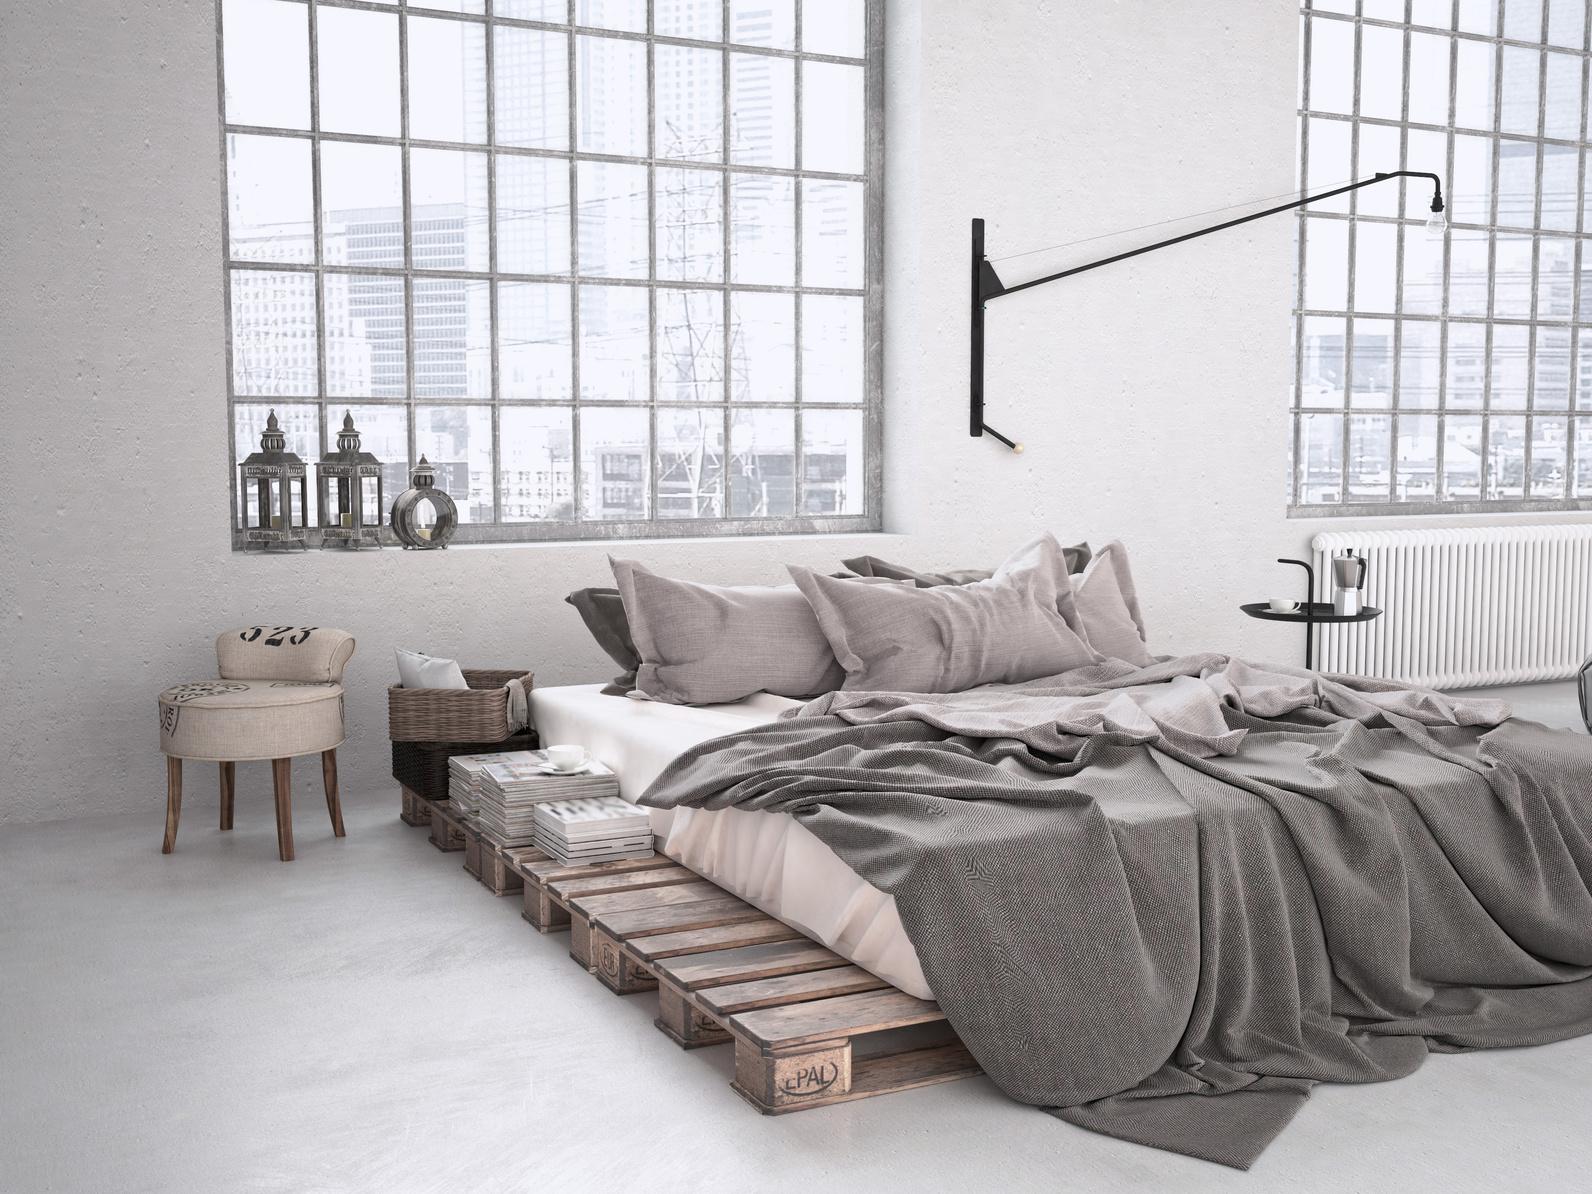 Schlafzimmer im Loft Stil #loft #palettenbett #palettenmöbel ©2mmedia - Fotolia